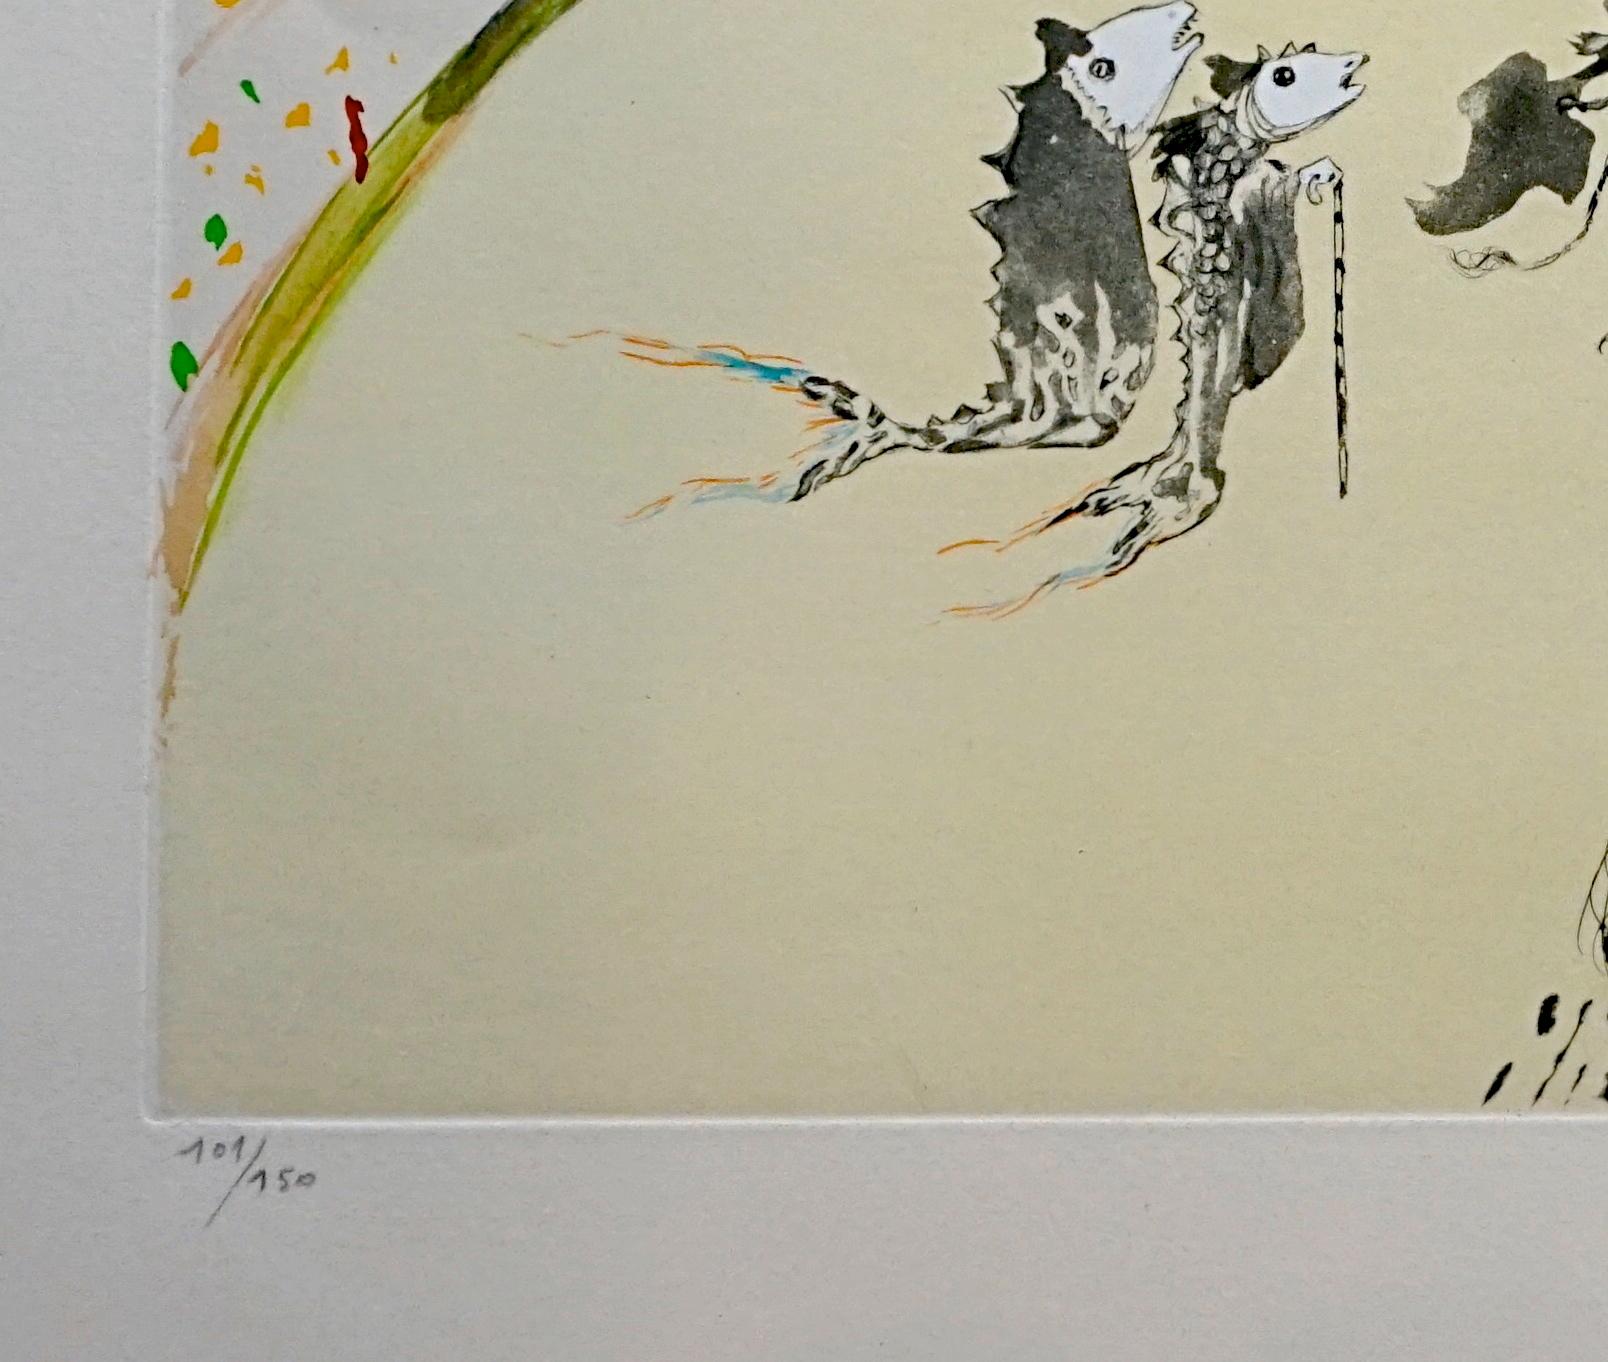 ARTIST: Salvador Dali

TITLE: Tauramachi Surrealiste Bullfight with Drawer

MEDIUM: Etching

SIGNED: Hand Signed 

PUBLISHER: Pierre Argillet, Paris 

EDITION NUMBER: 101/150

MEASUREMENTS: 26